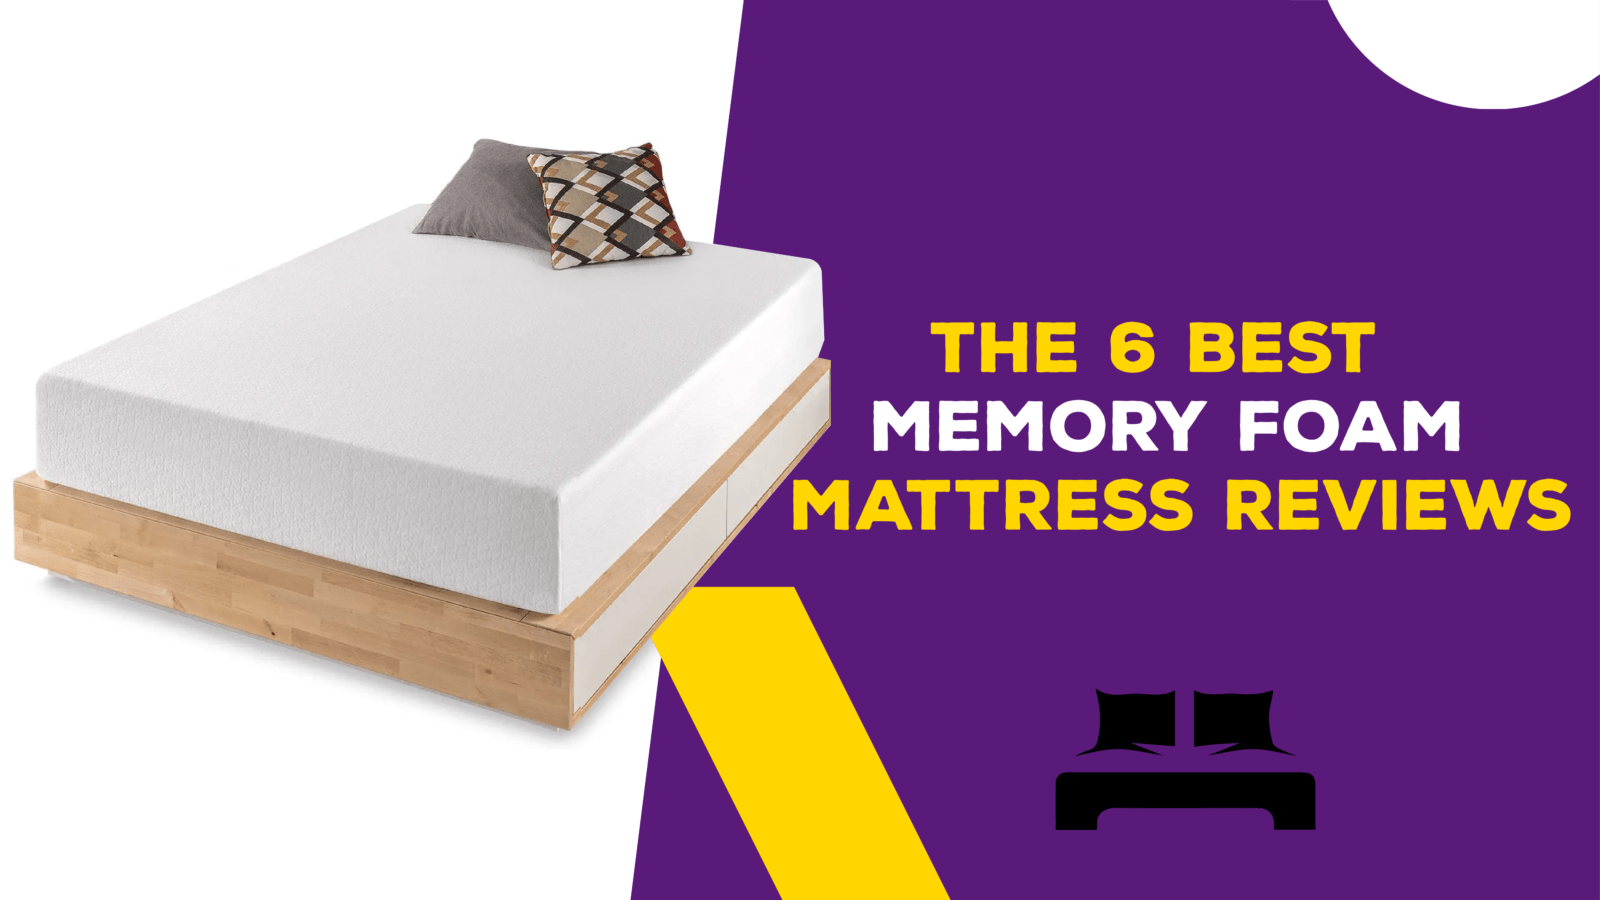 6 inch memory foam mattress topper reviews